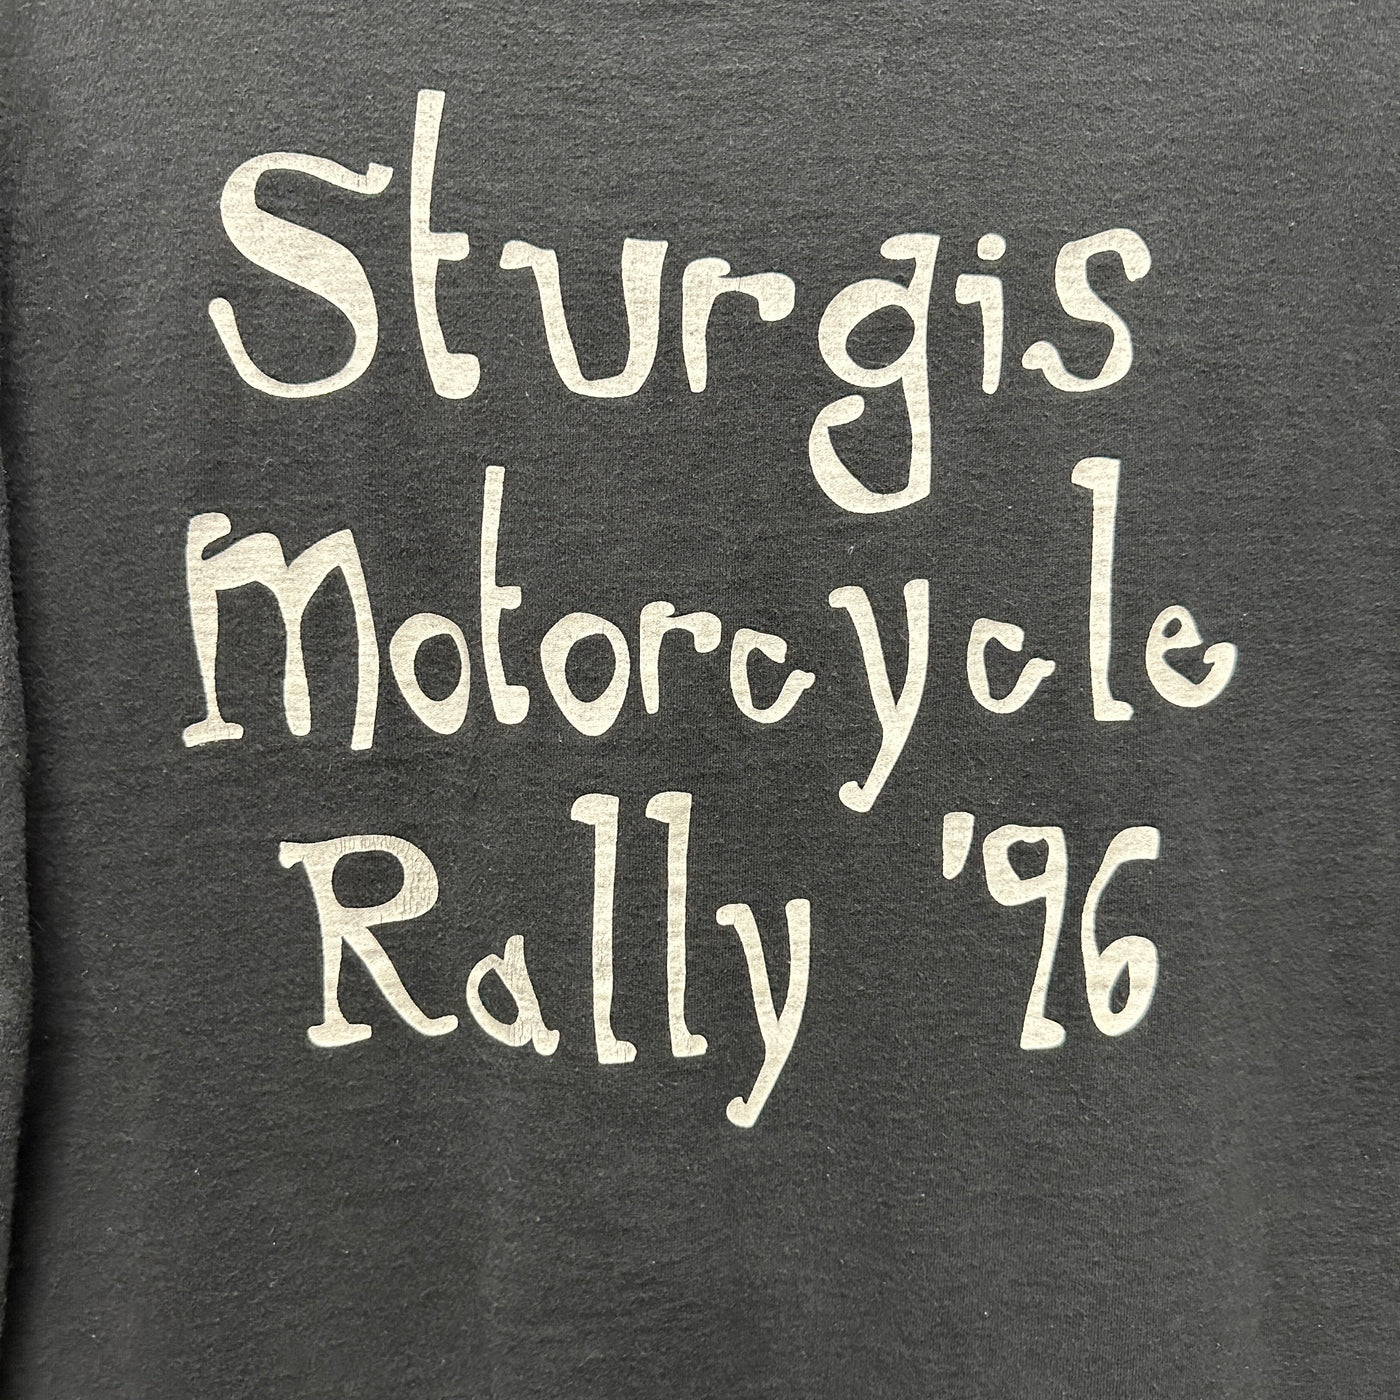 '96 Sturgis Motorcycle Rally Black Harley Davidson T-shirt sz L